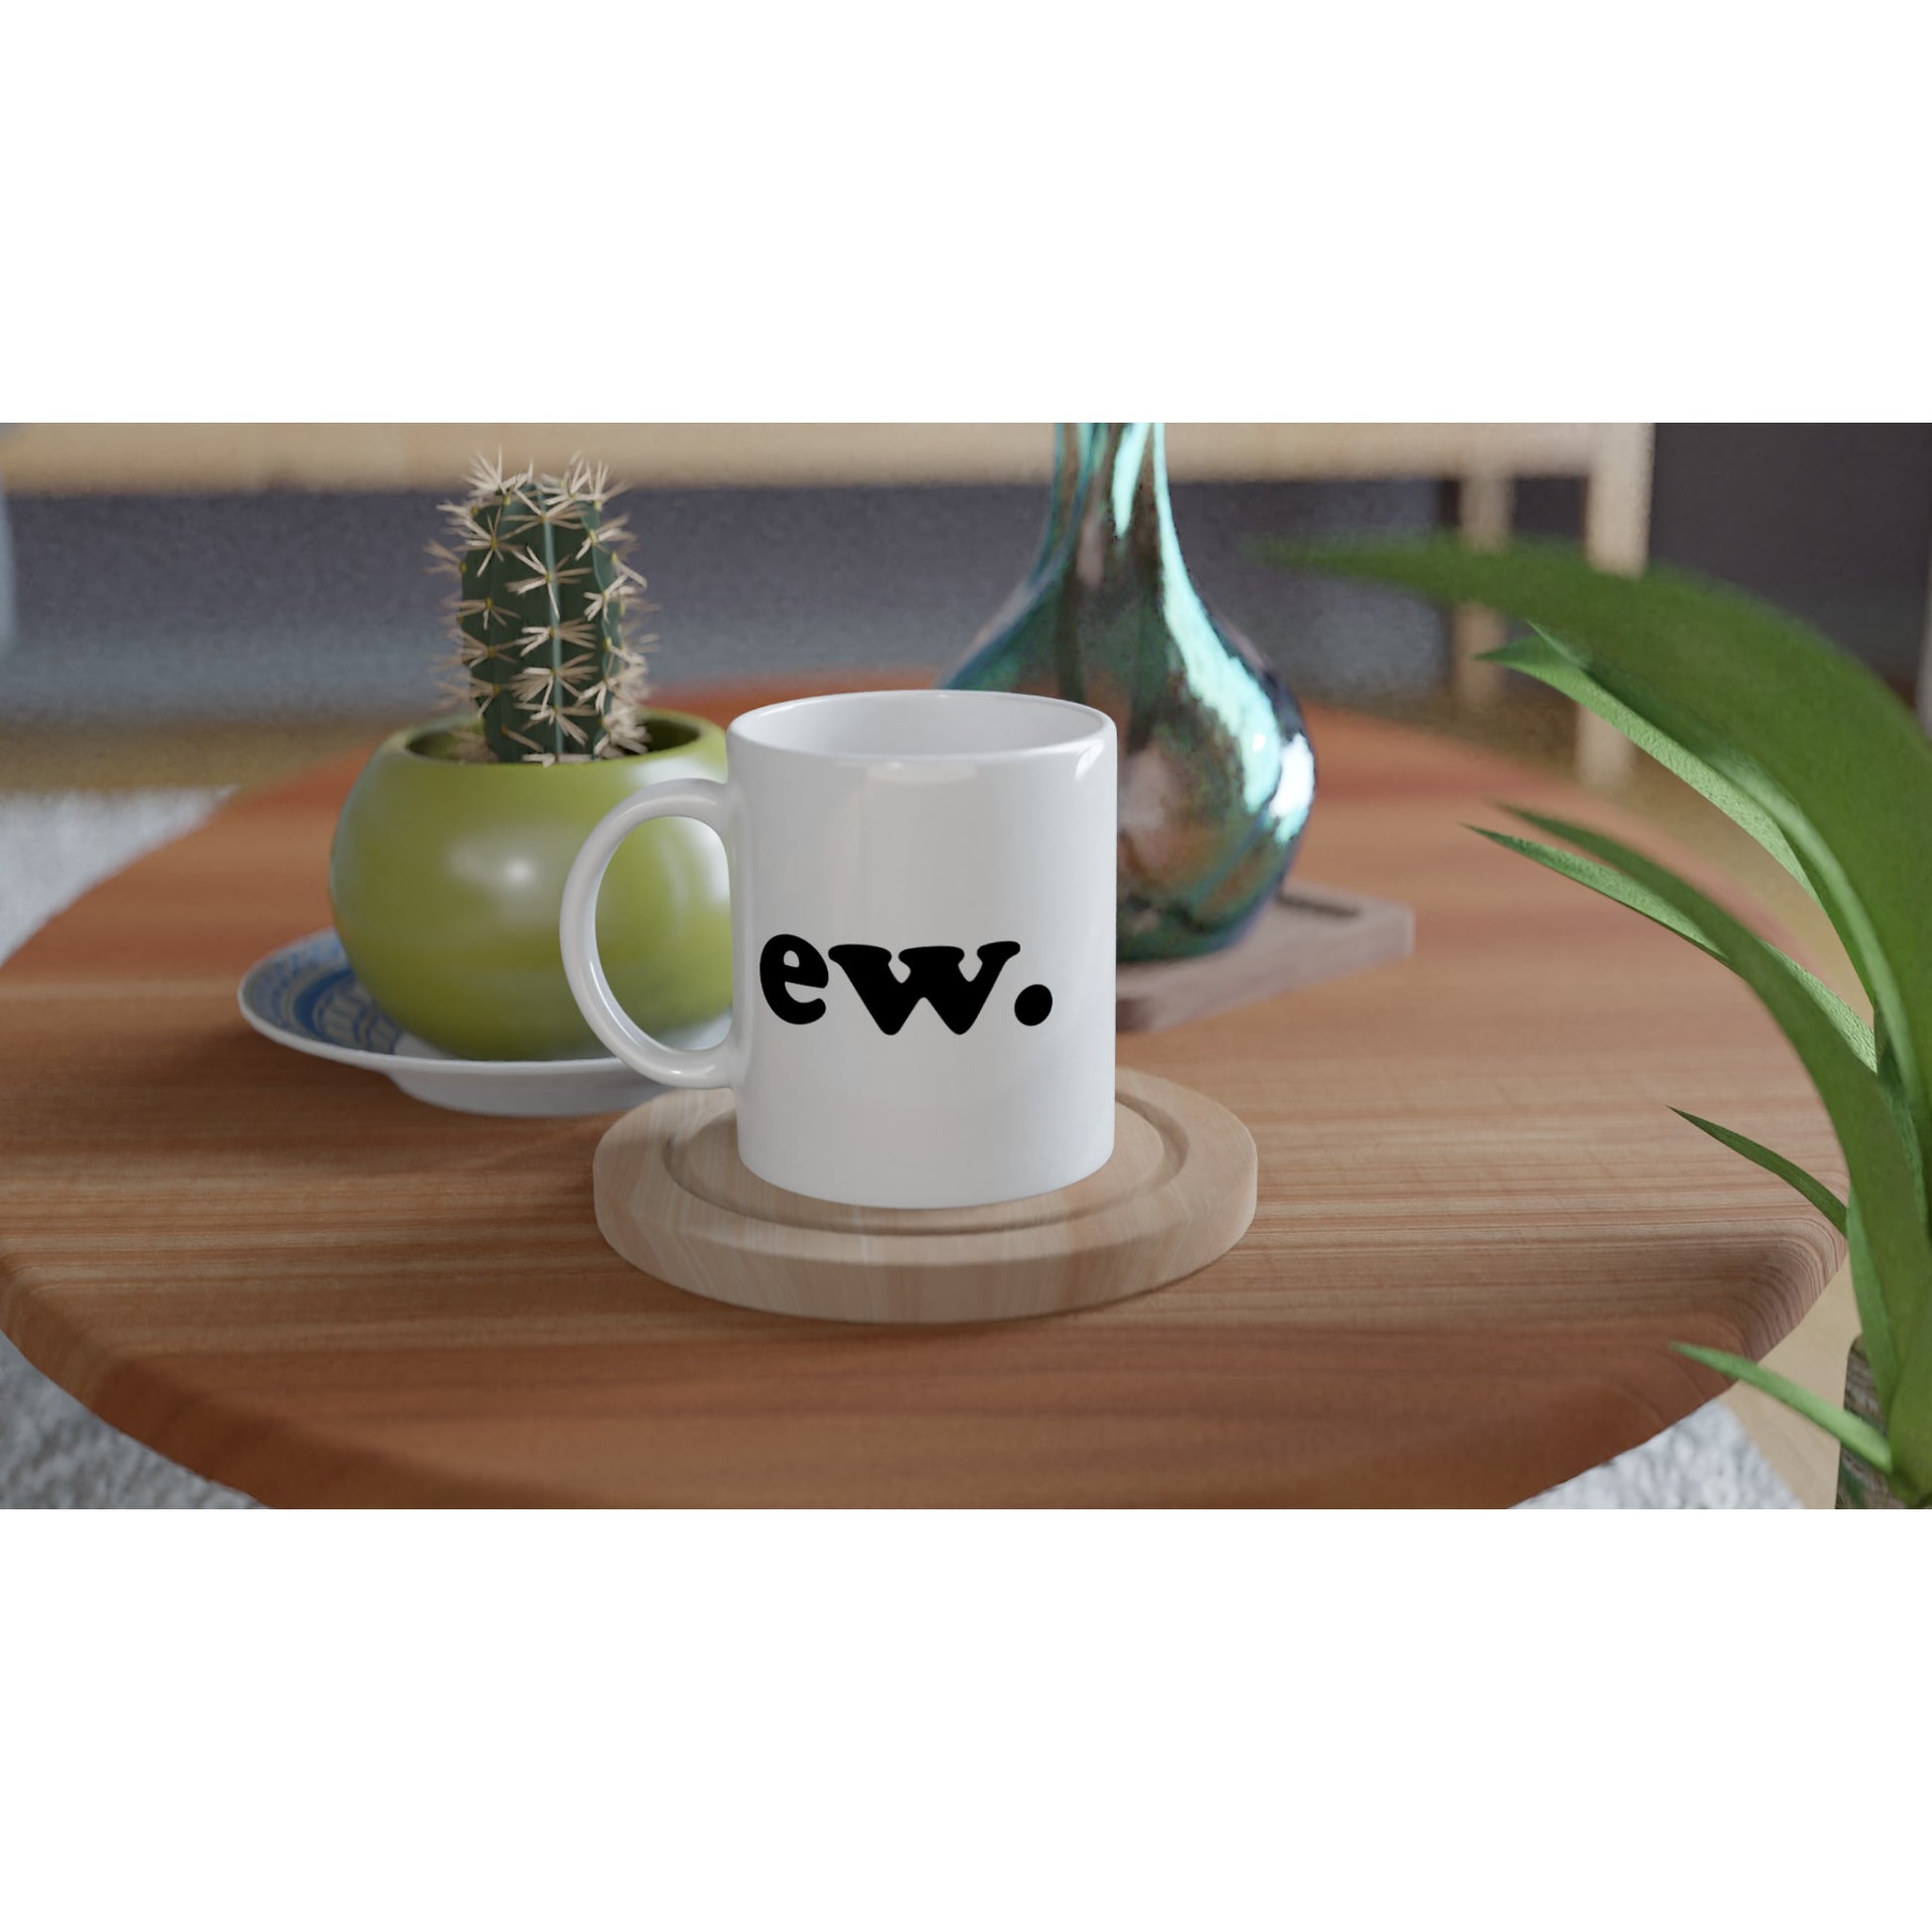 ew - White 11oz Ceramic Mug - Mister Snarky's